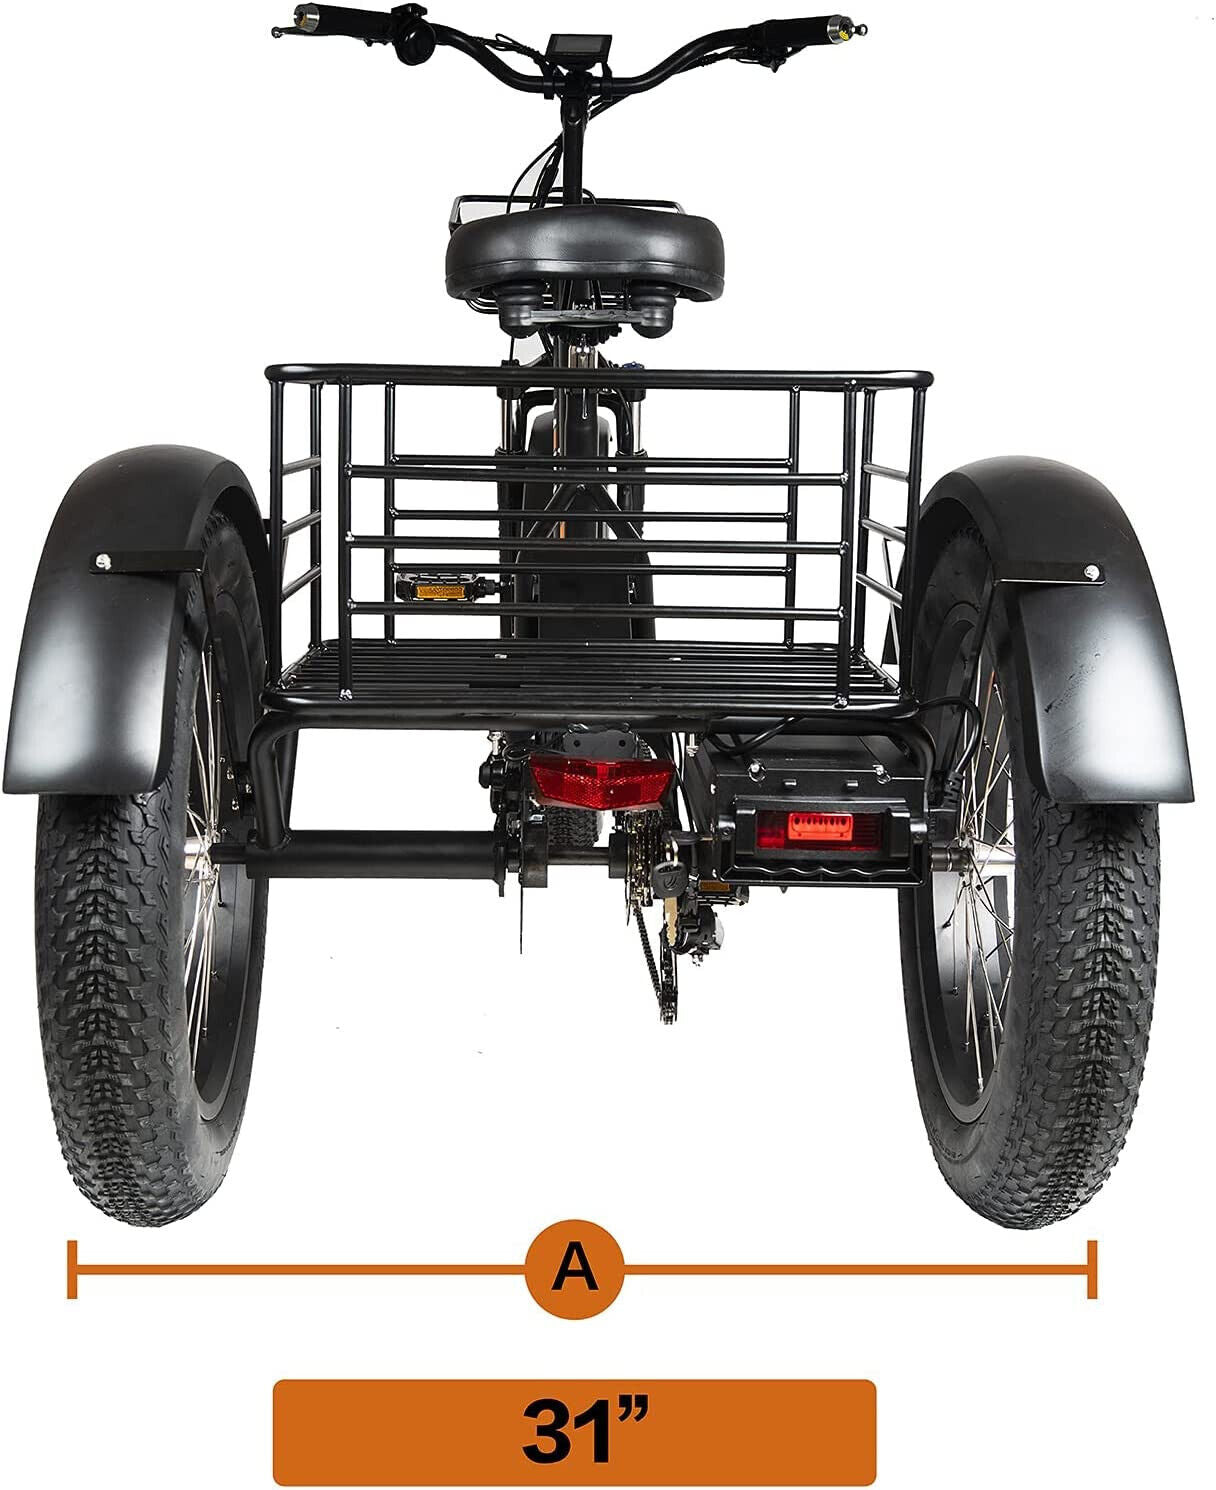 750W Fat Tyre Electric Tricycle Bafang Motor 7 Speeds Shimano Rear Rack Basket Trolley